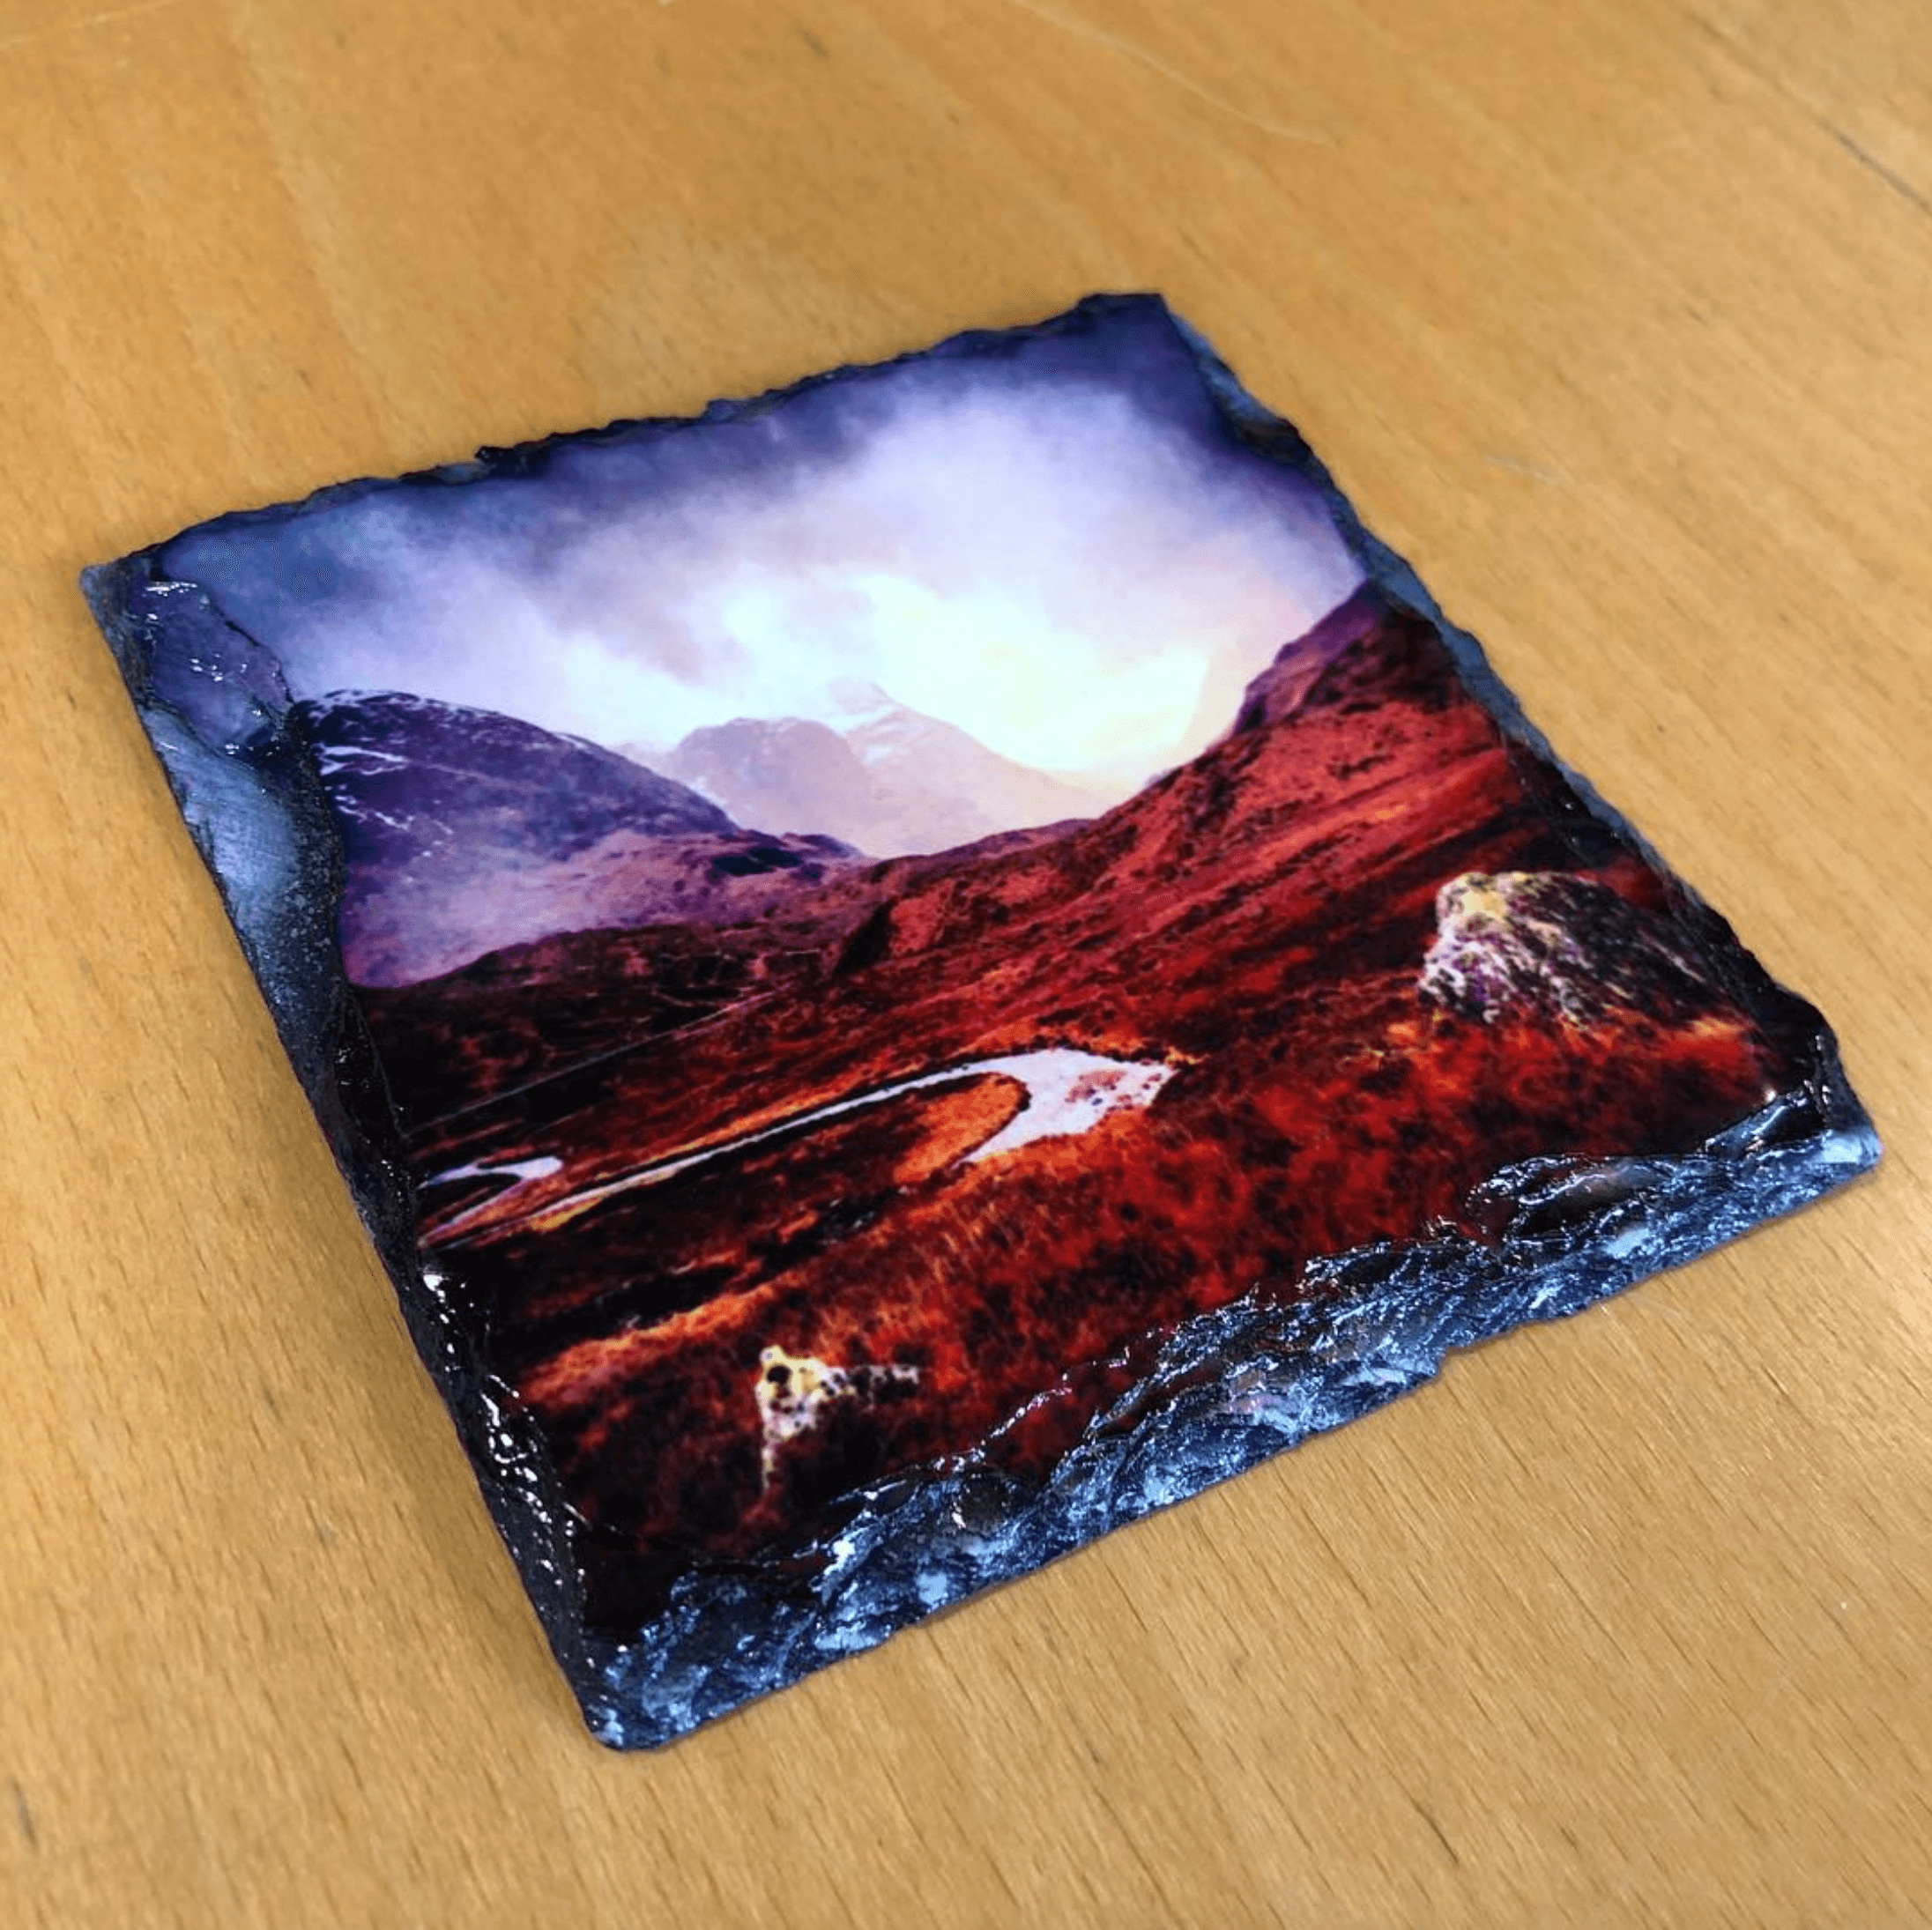 Glen Nevis Moonlight Scottish Slate Art-Slate Art-Scottish Lochs & Mountains Art Gallery-Paintings, Prints, Homeware, Art Gifts From Scotland By Scottish Artist Kevin Hunter